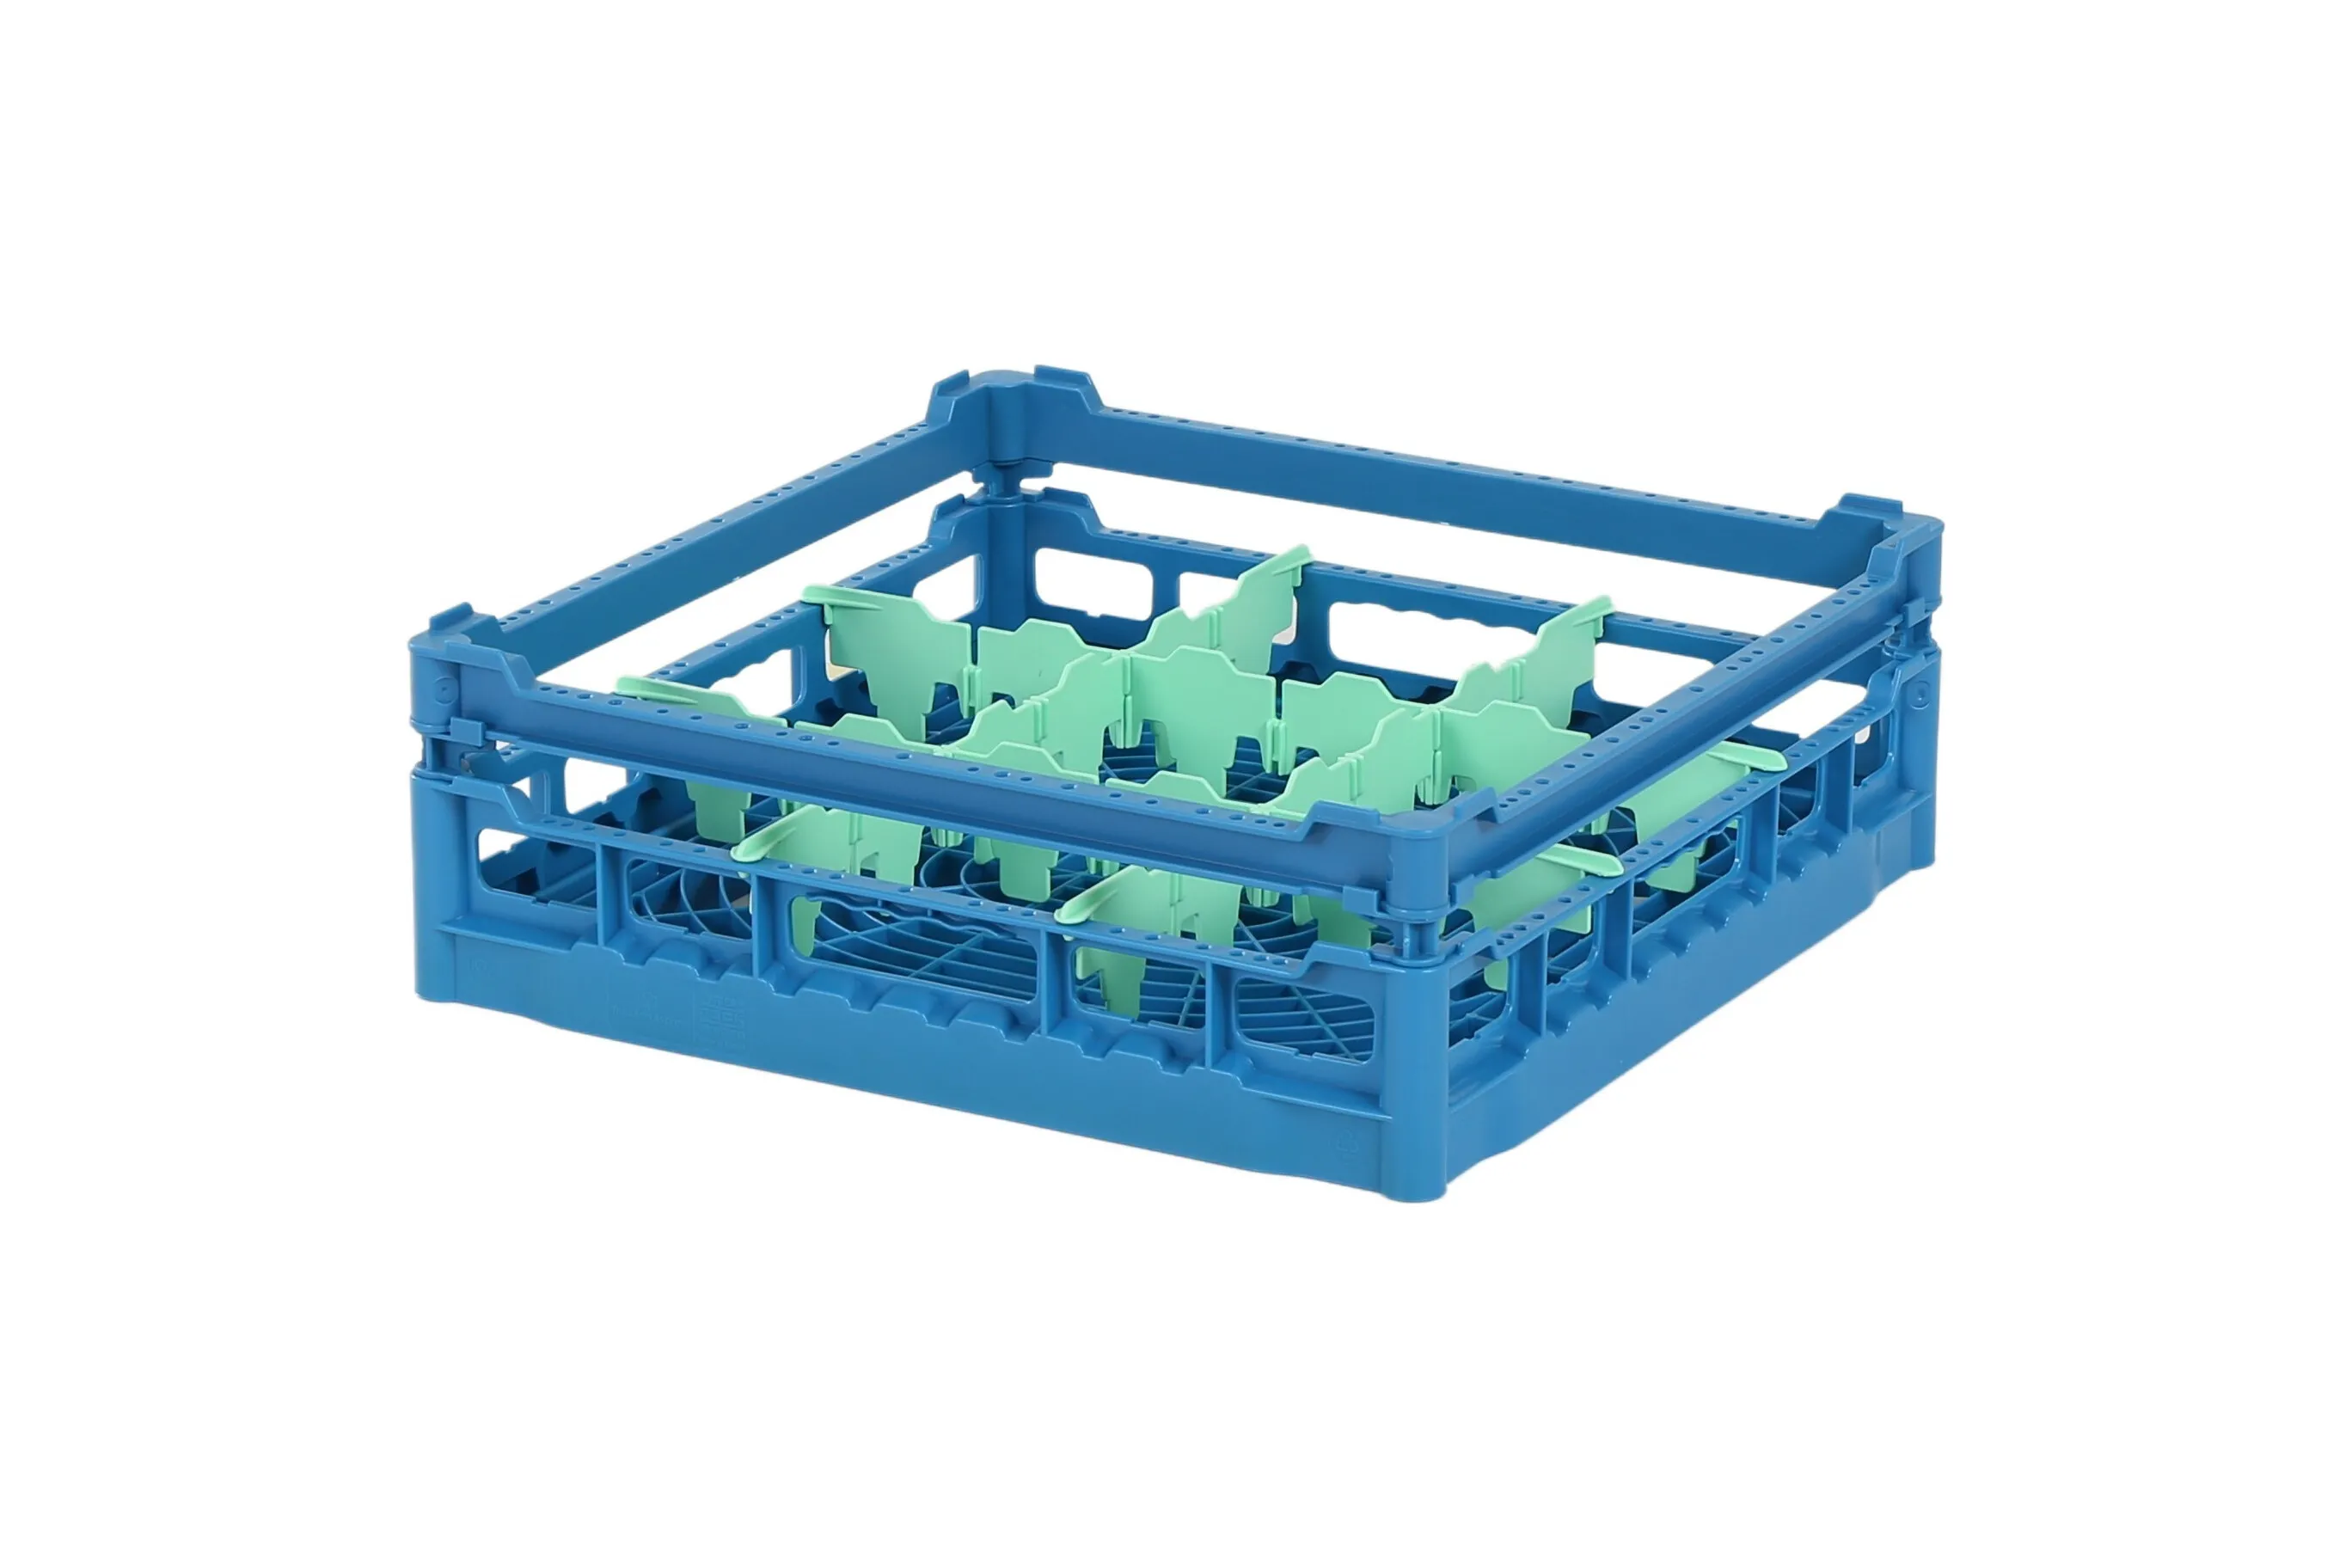 Glass basket 500x500mm blue – maximum glass height 120 mm – with green 3 x 3 compartmentalization – maximum Ø glass 149mm